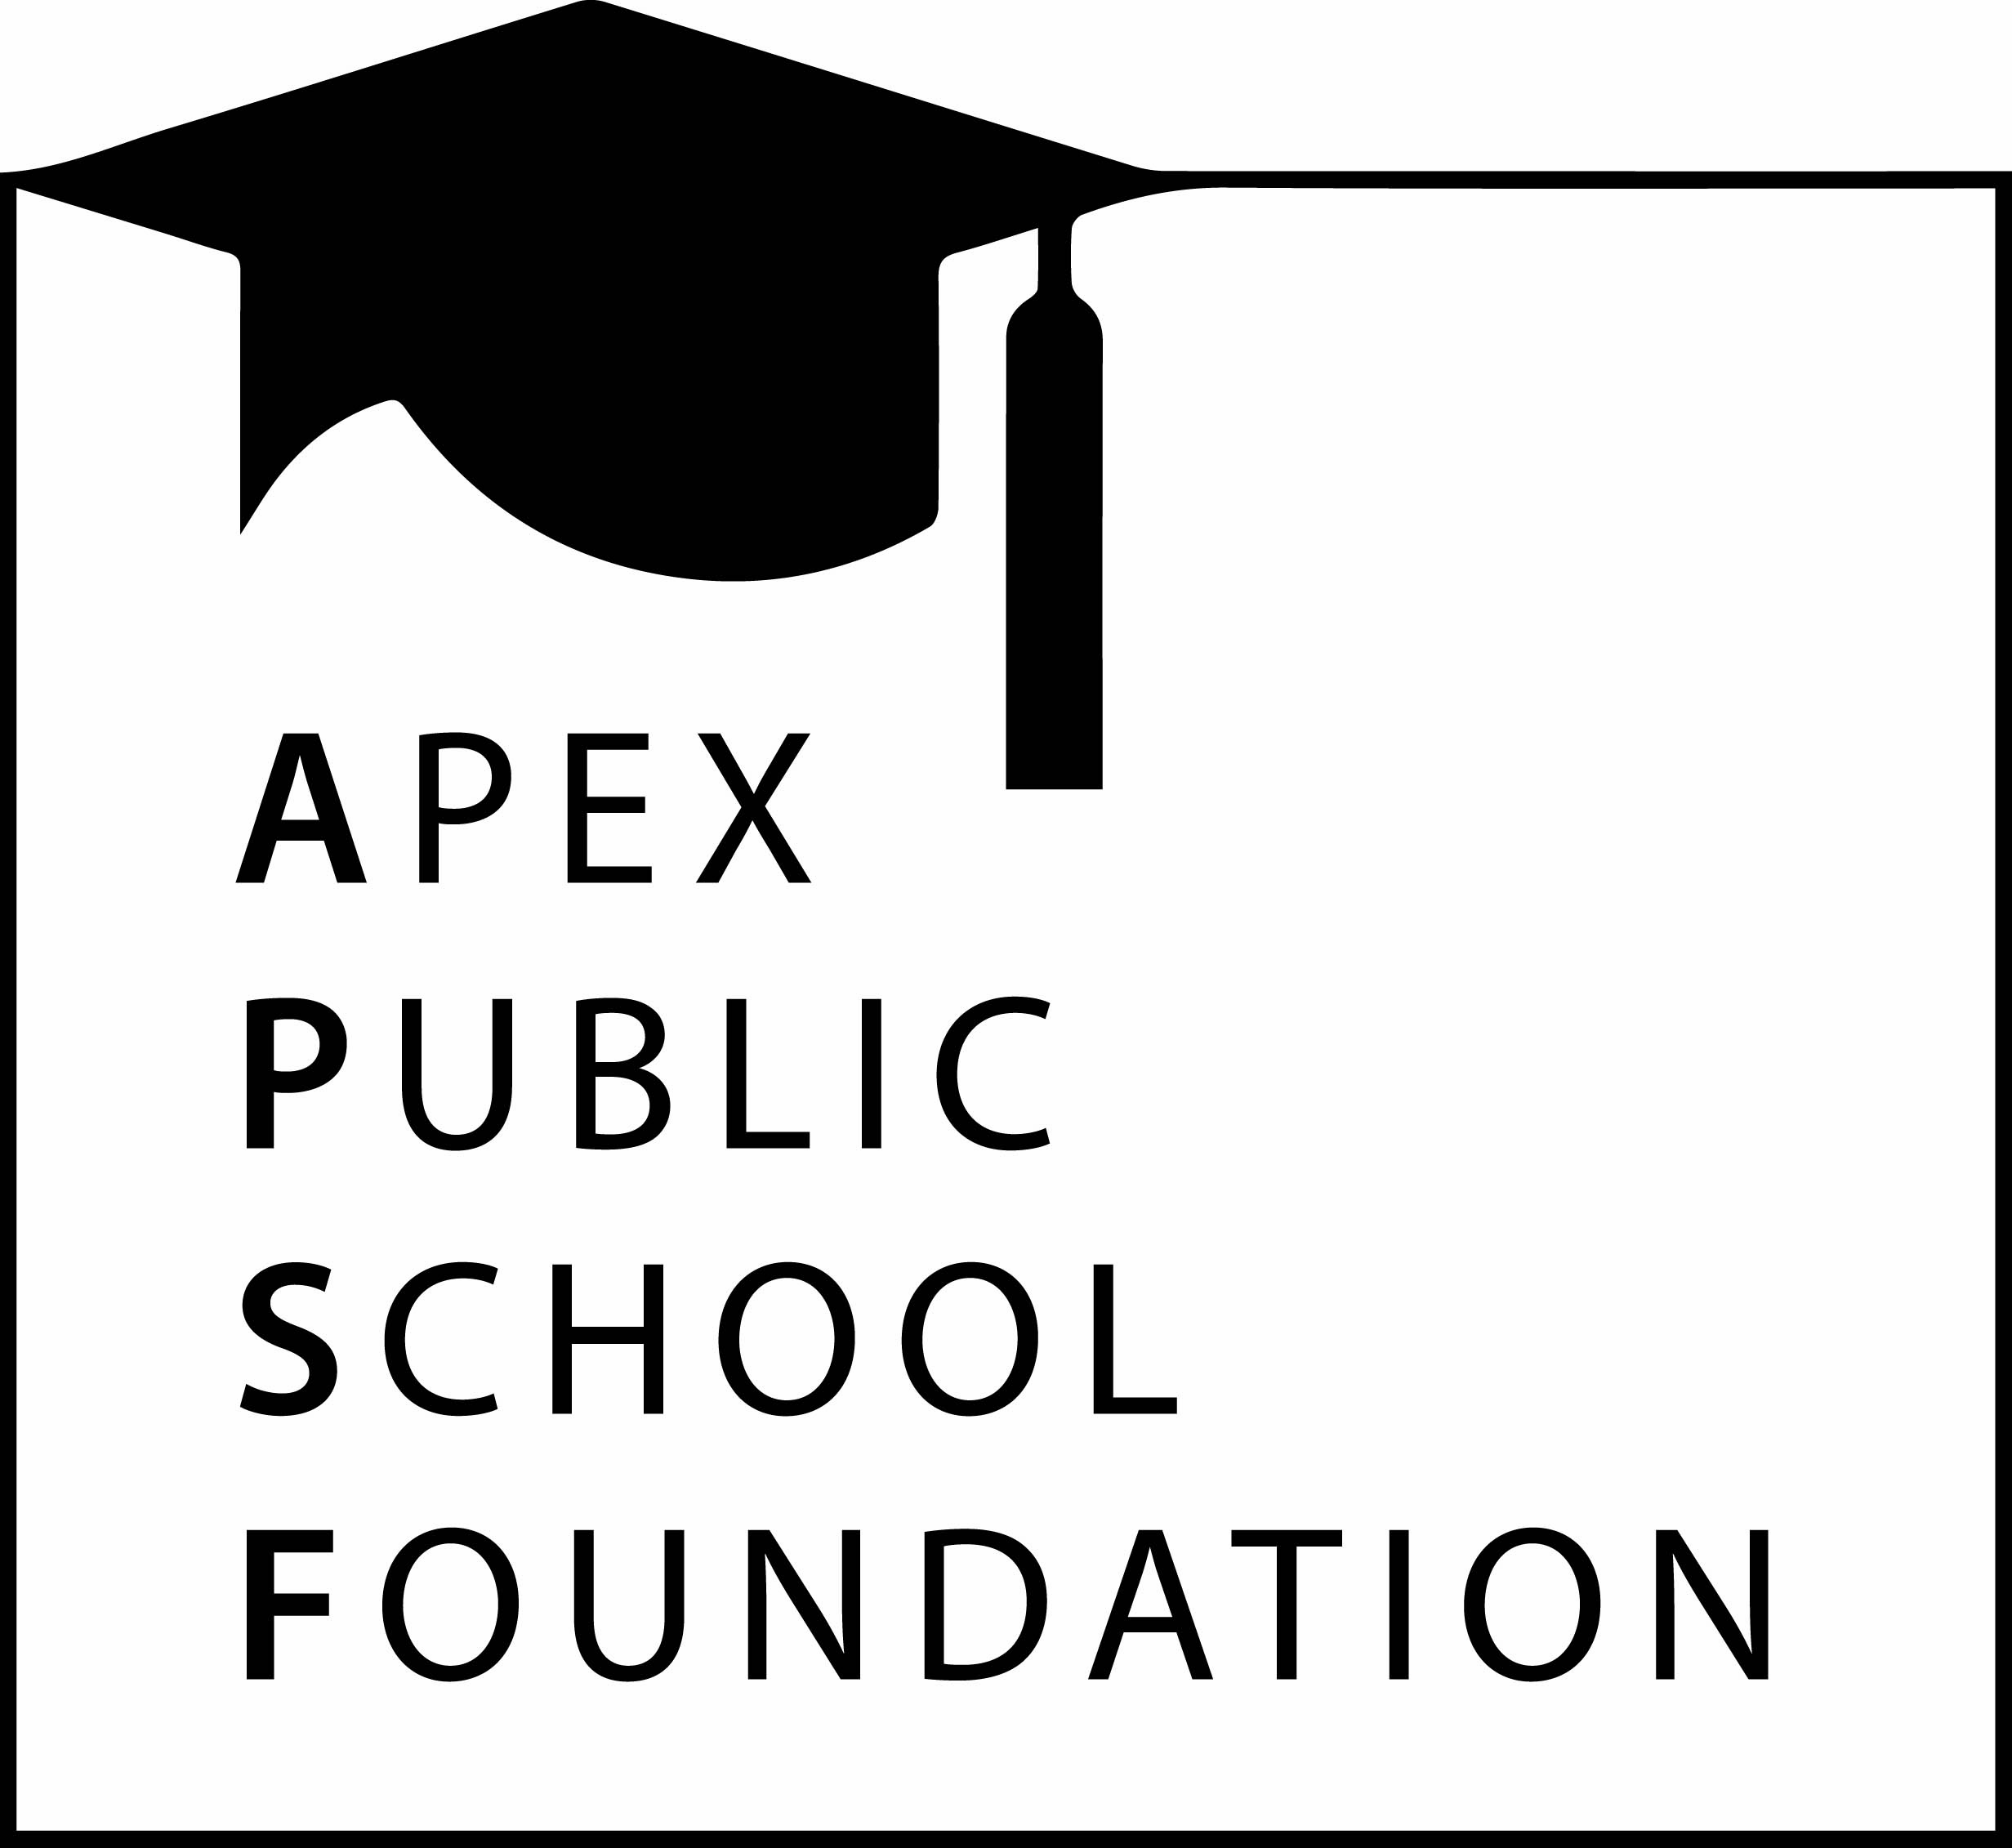 The Apex Public School Foundation   By Amy Iori